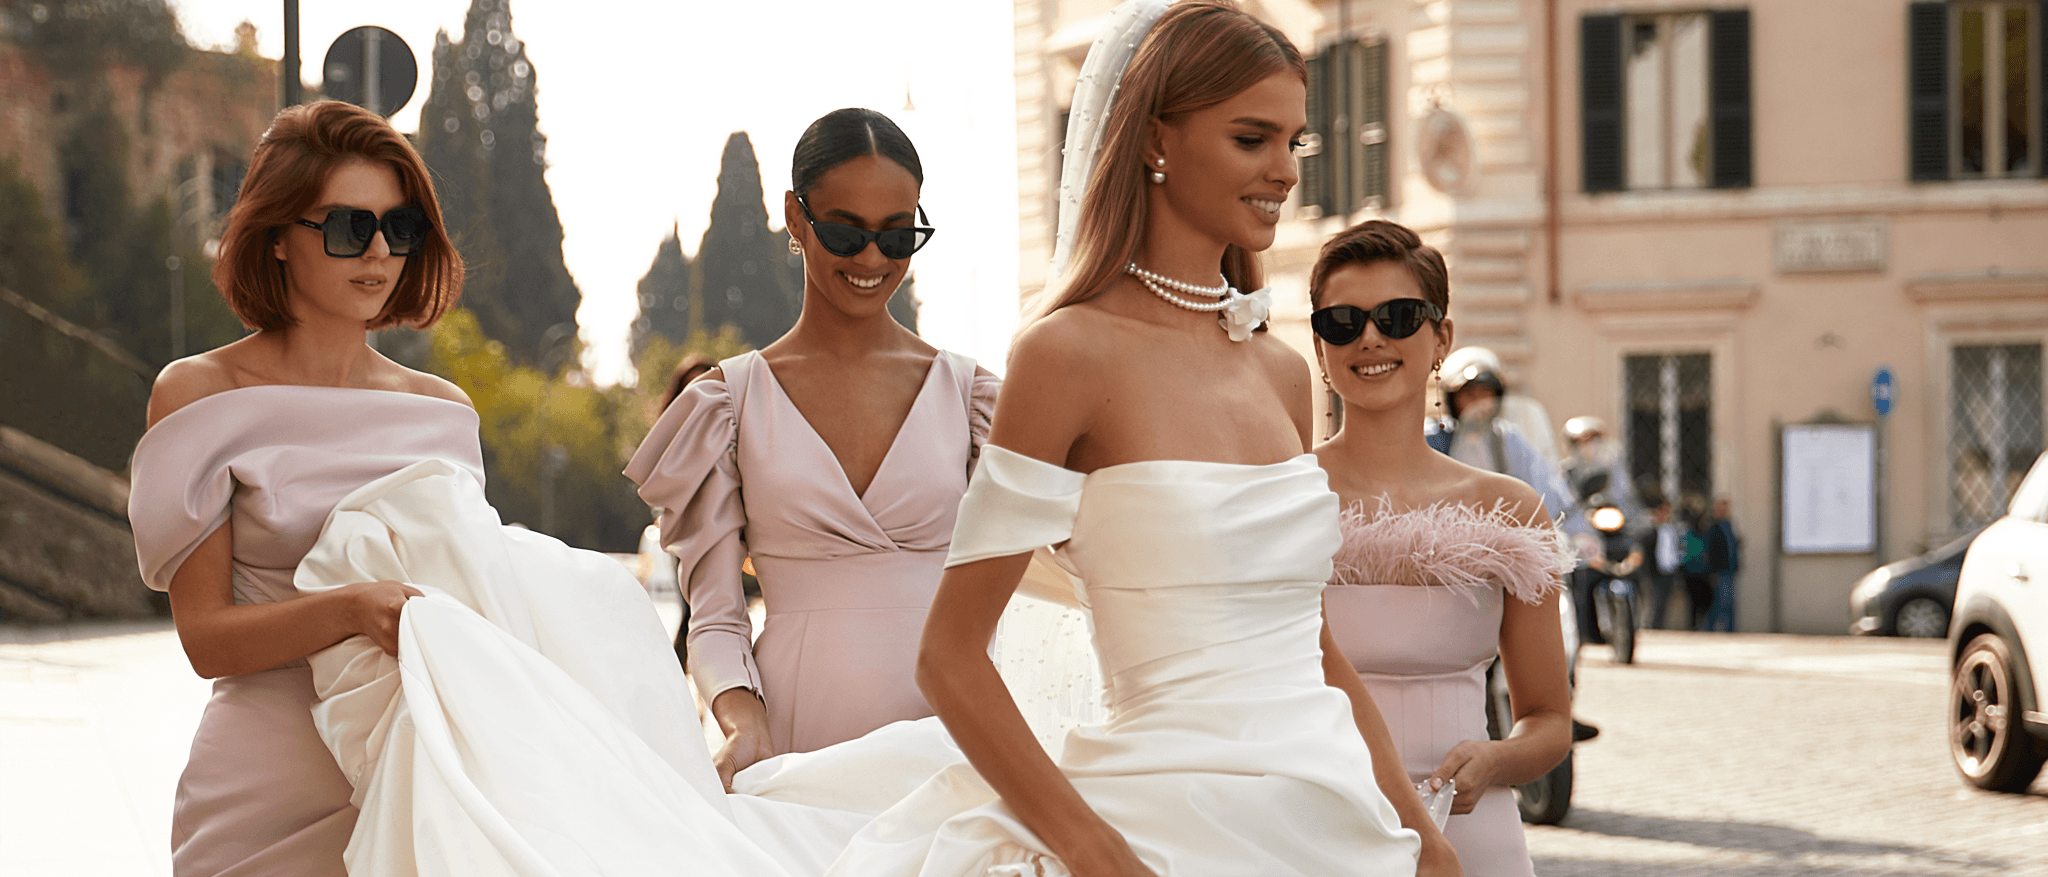 Bridesmaid dress options - Milla